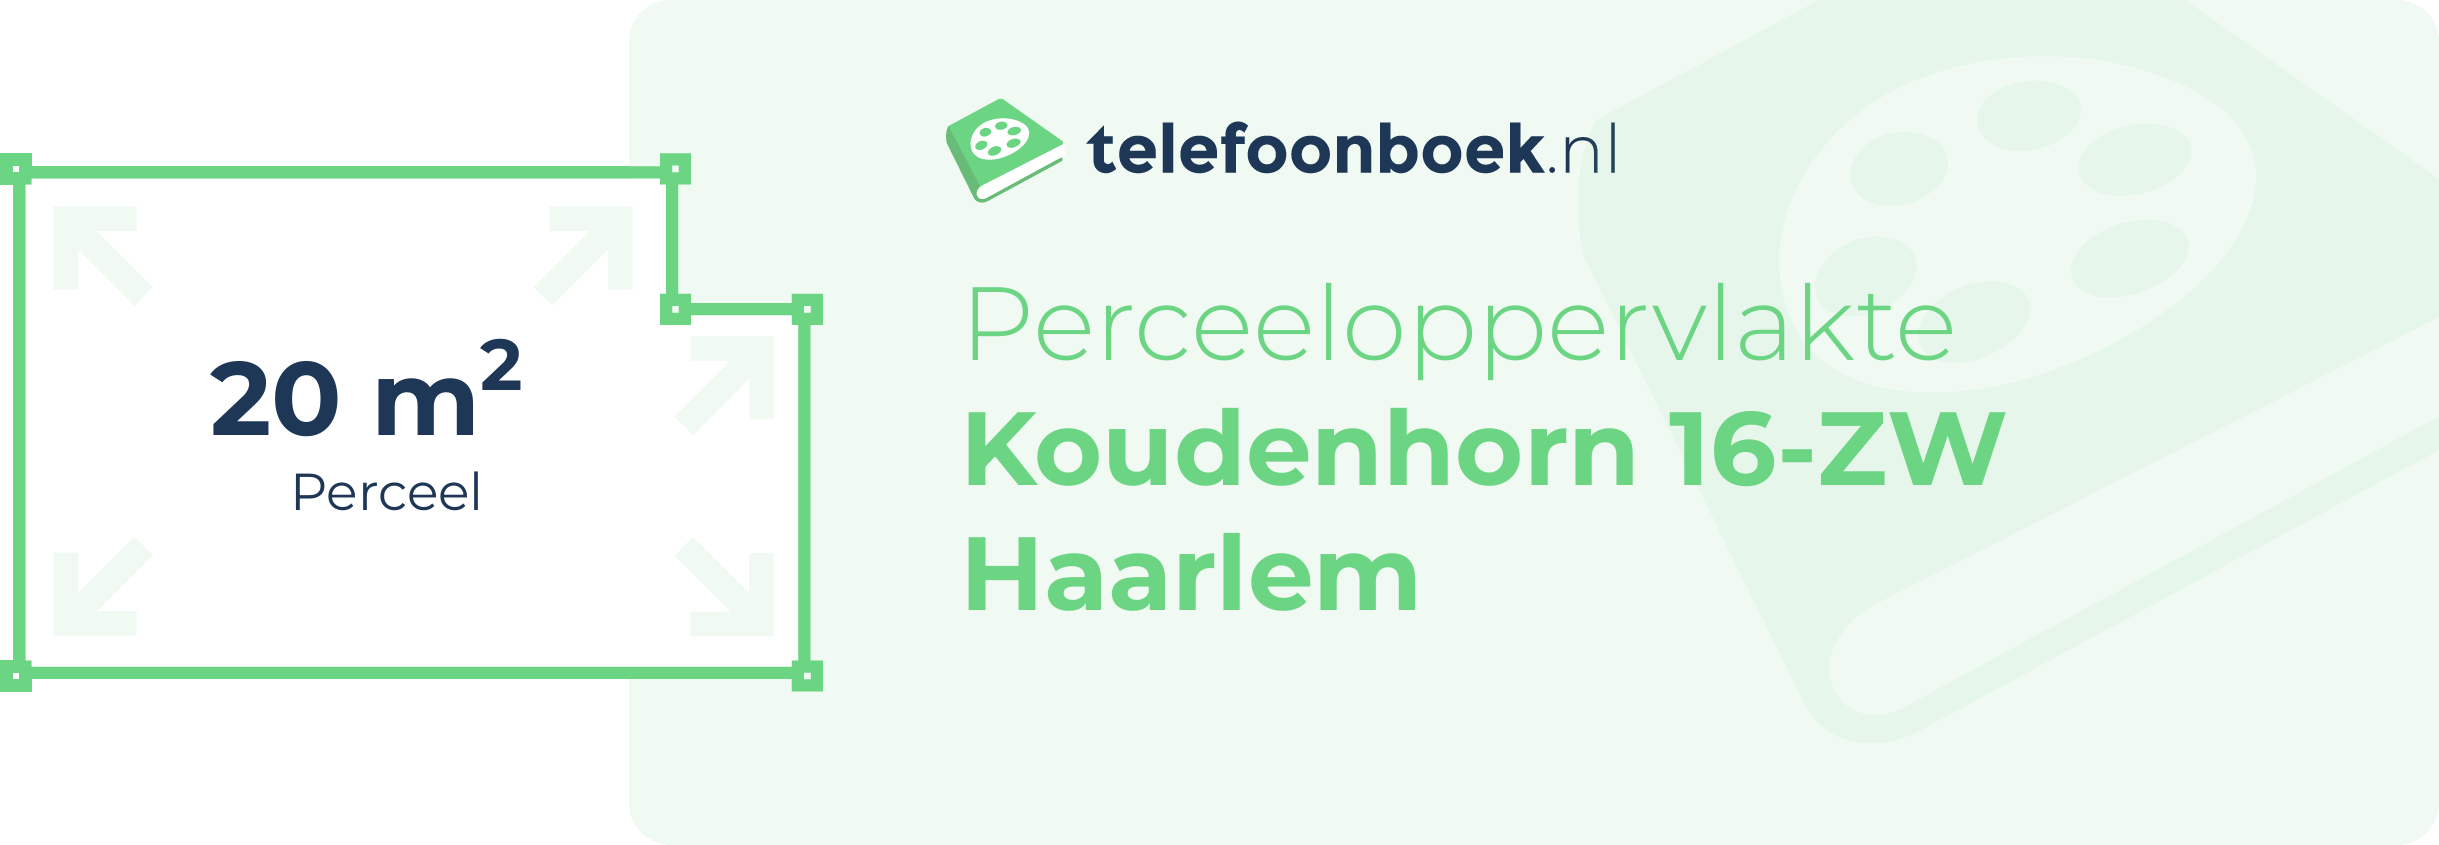 Perceeloppervlakte Koudenhorn 16-ZW Haarlem